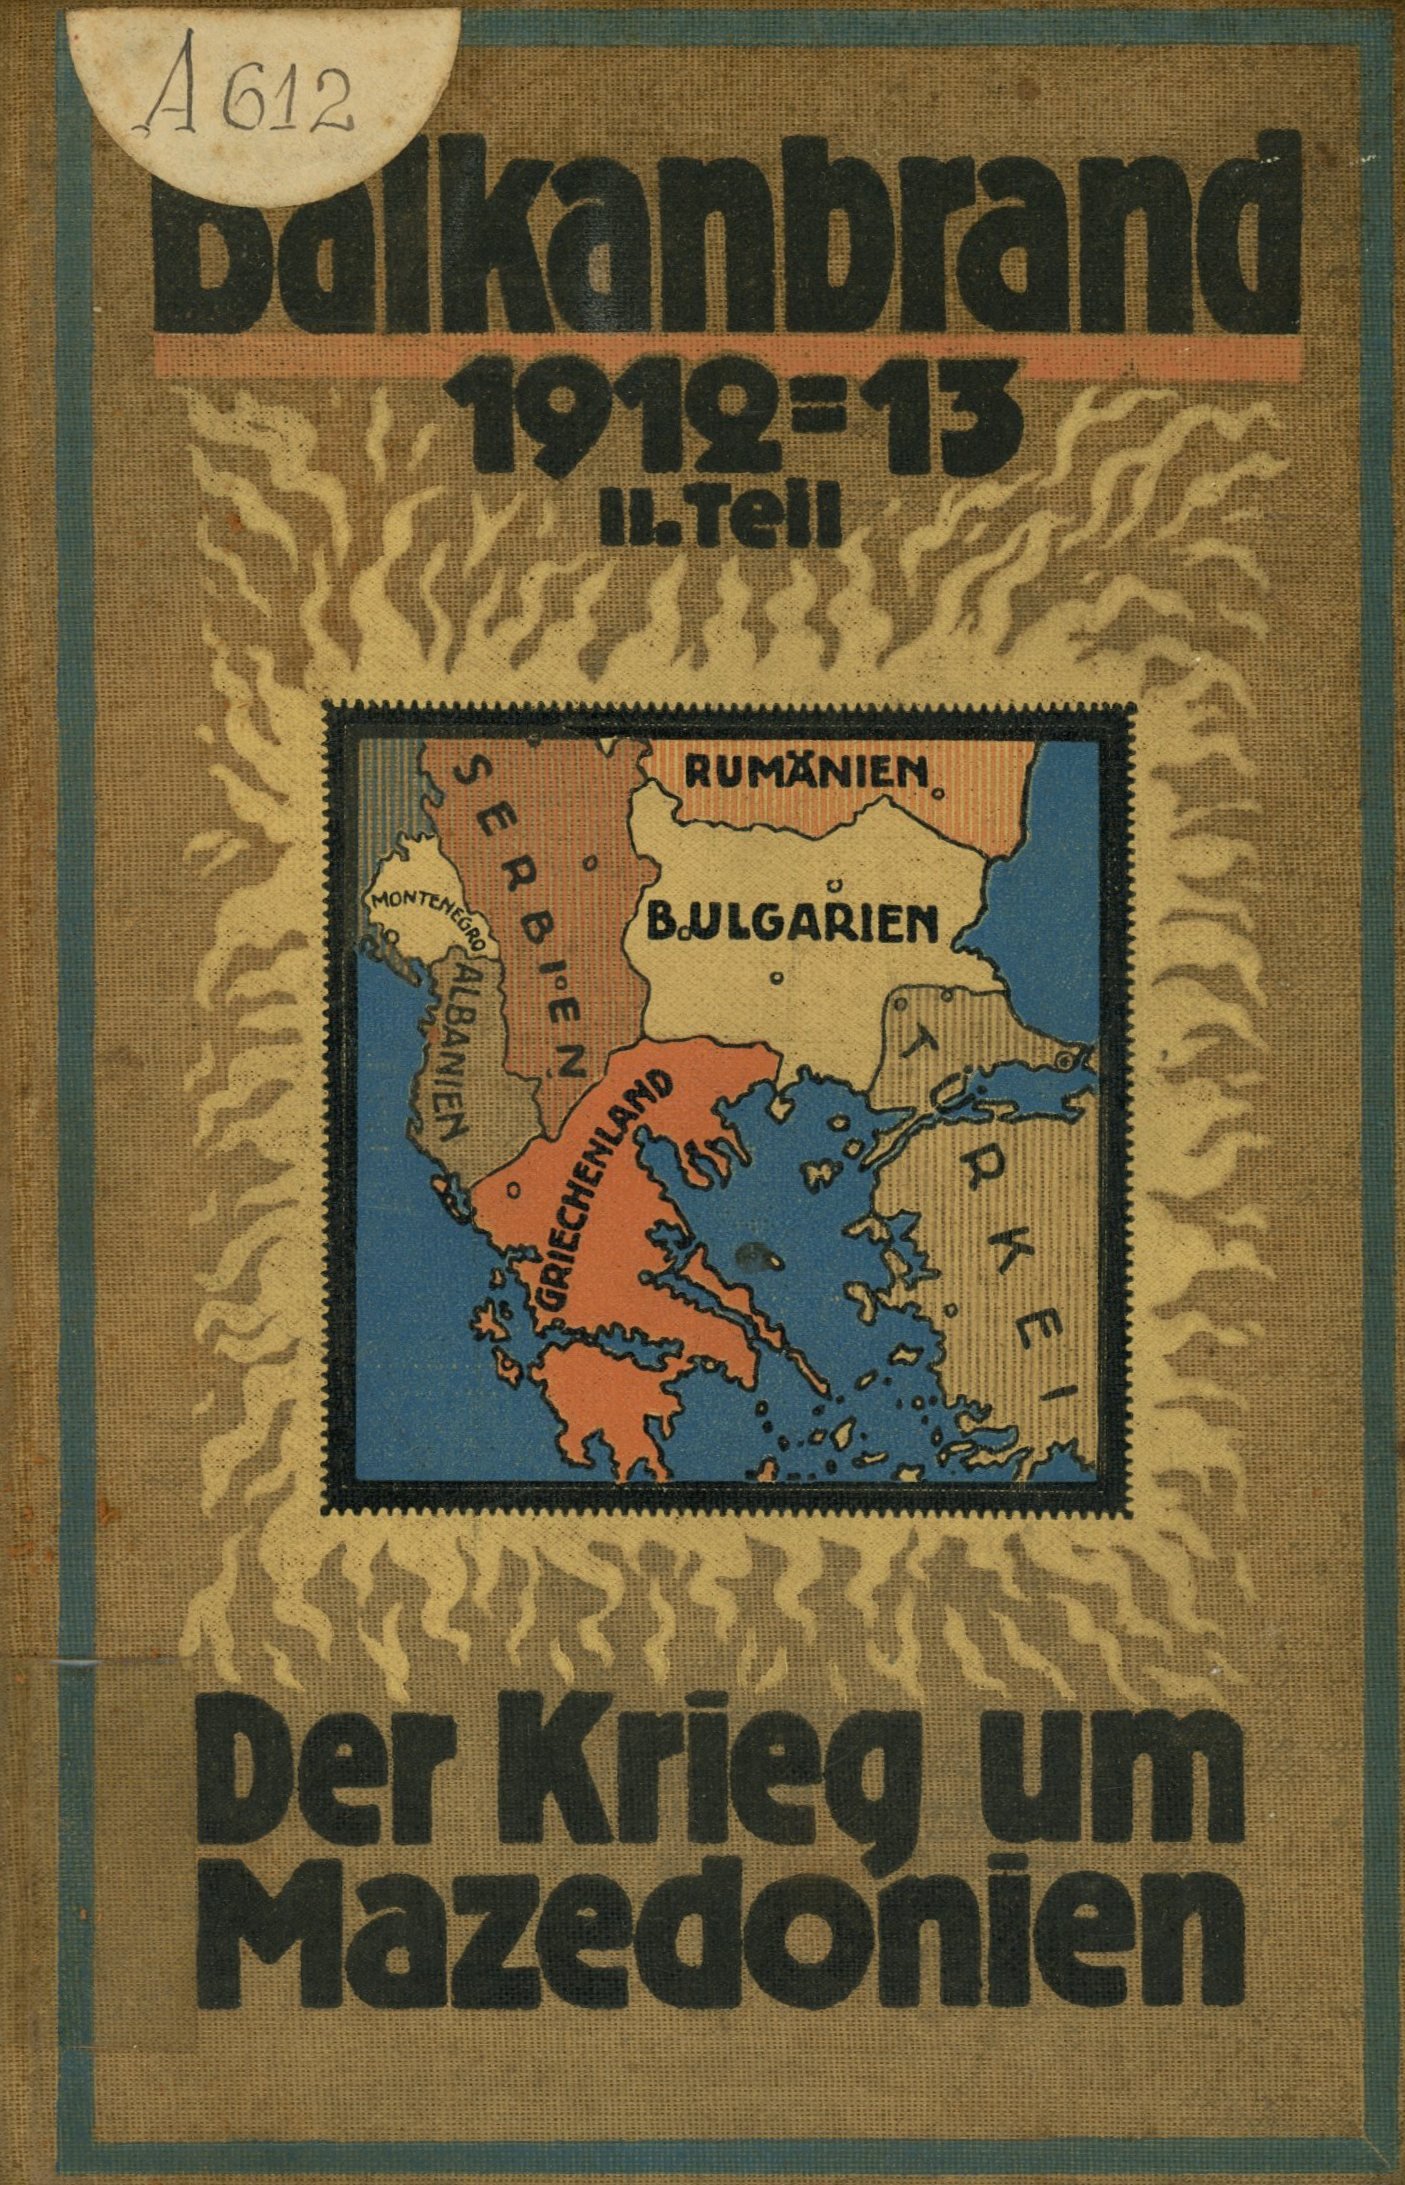 Der Balkanbrand 1912/13 Zweiter Teil (Erkel Ferenc Területi Múzeum, Gyula CC BY-NC-SA)